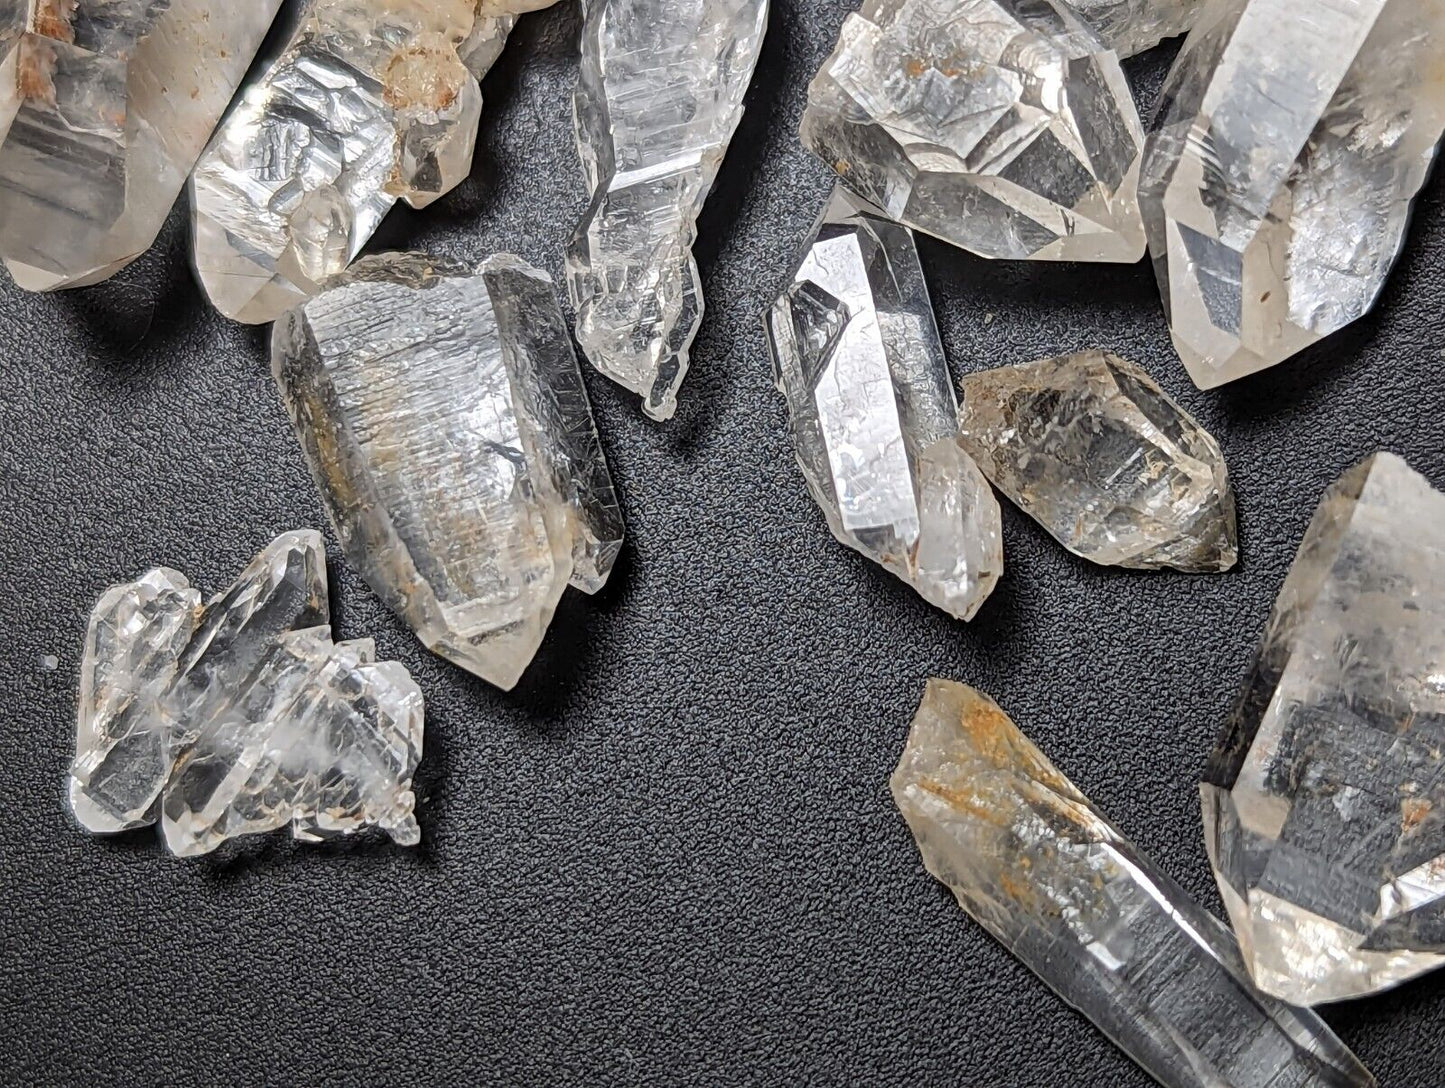 Arkansas Quartz Crystals, 1 oz set, approx 20-25 small, Garland Co, old stock.